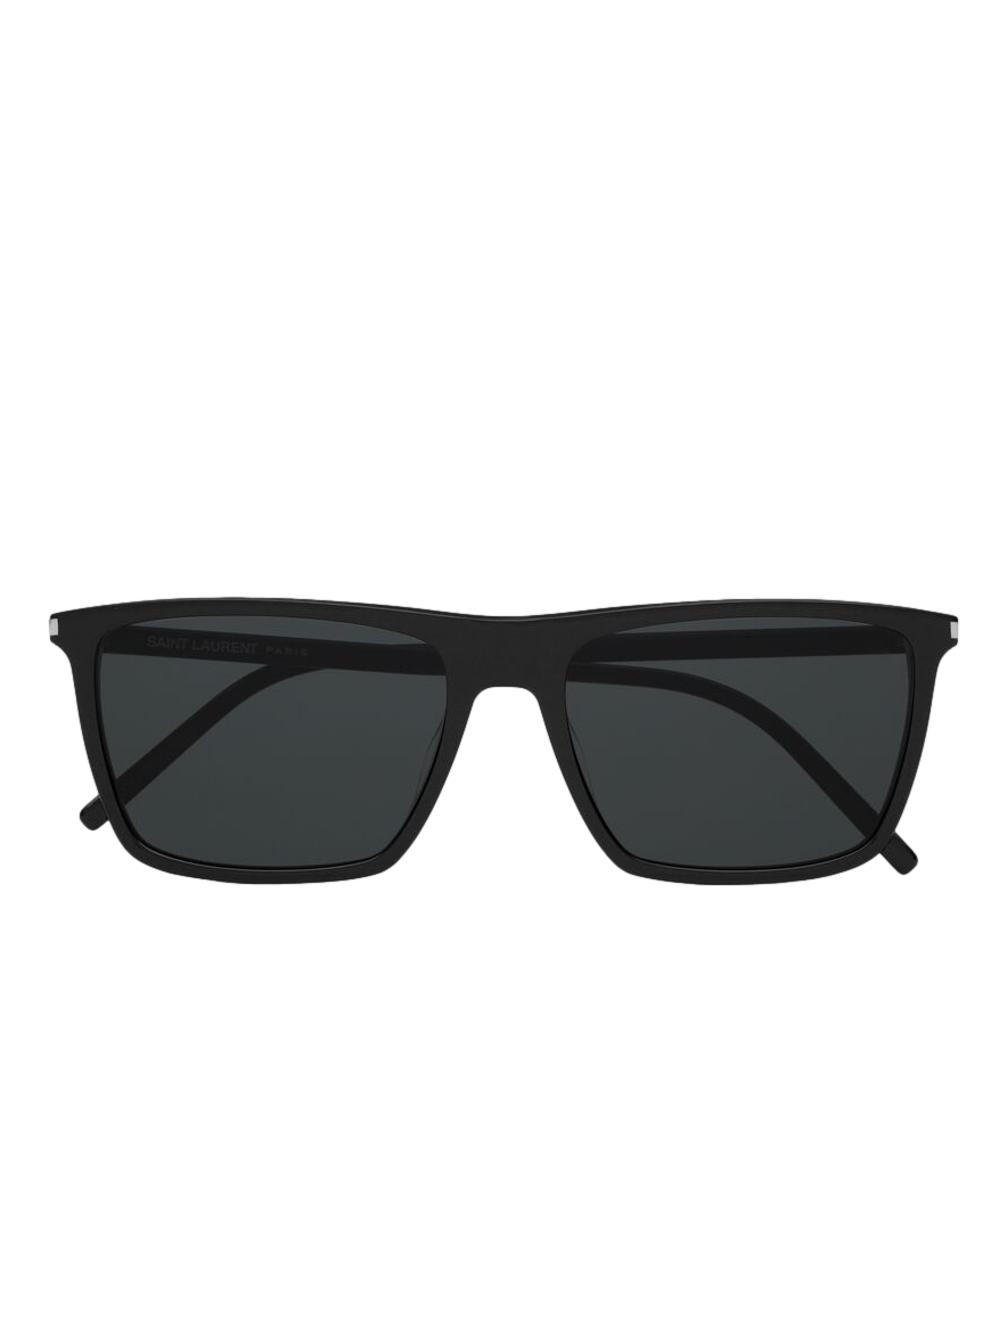 SL 668 sunglasses